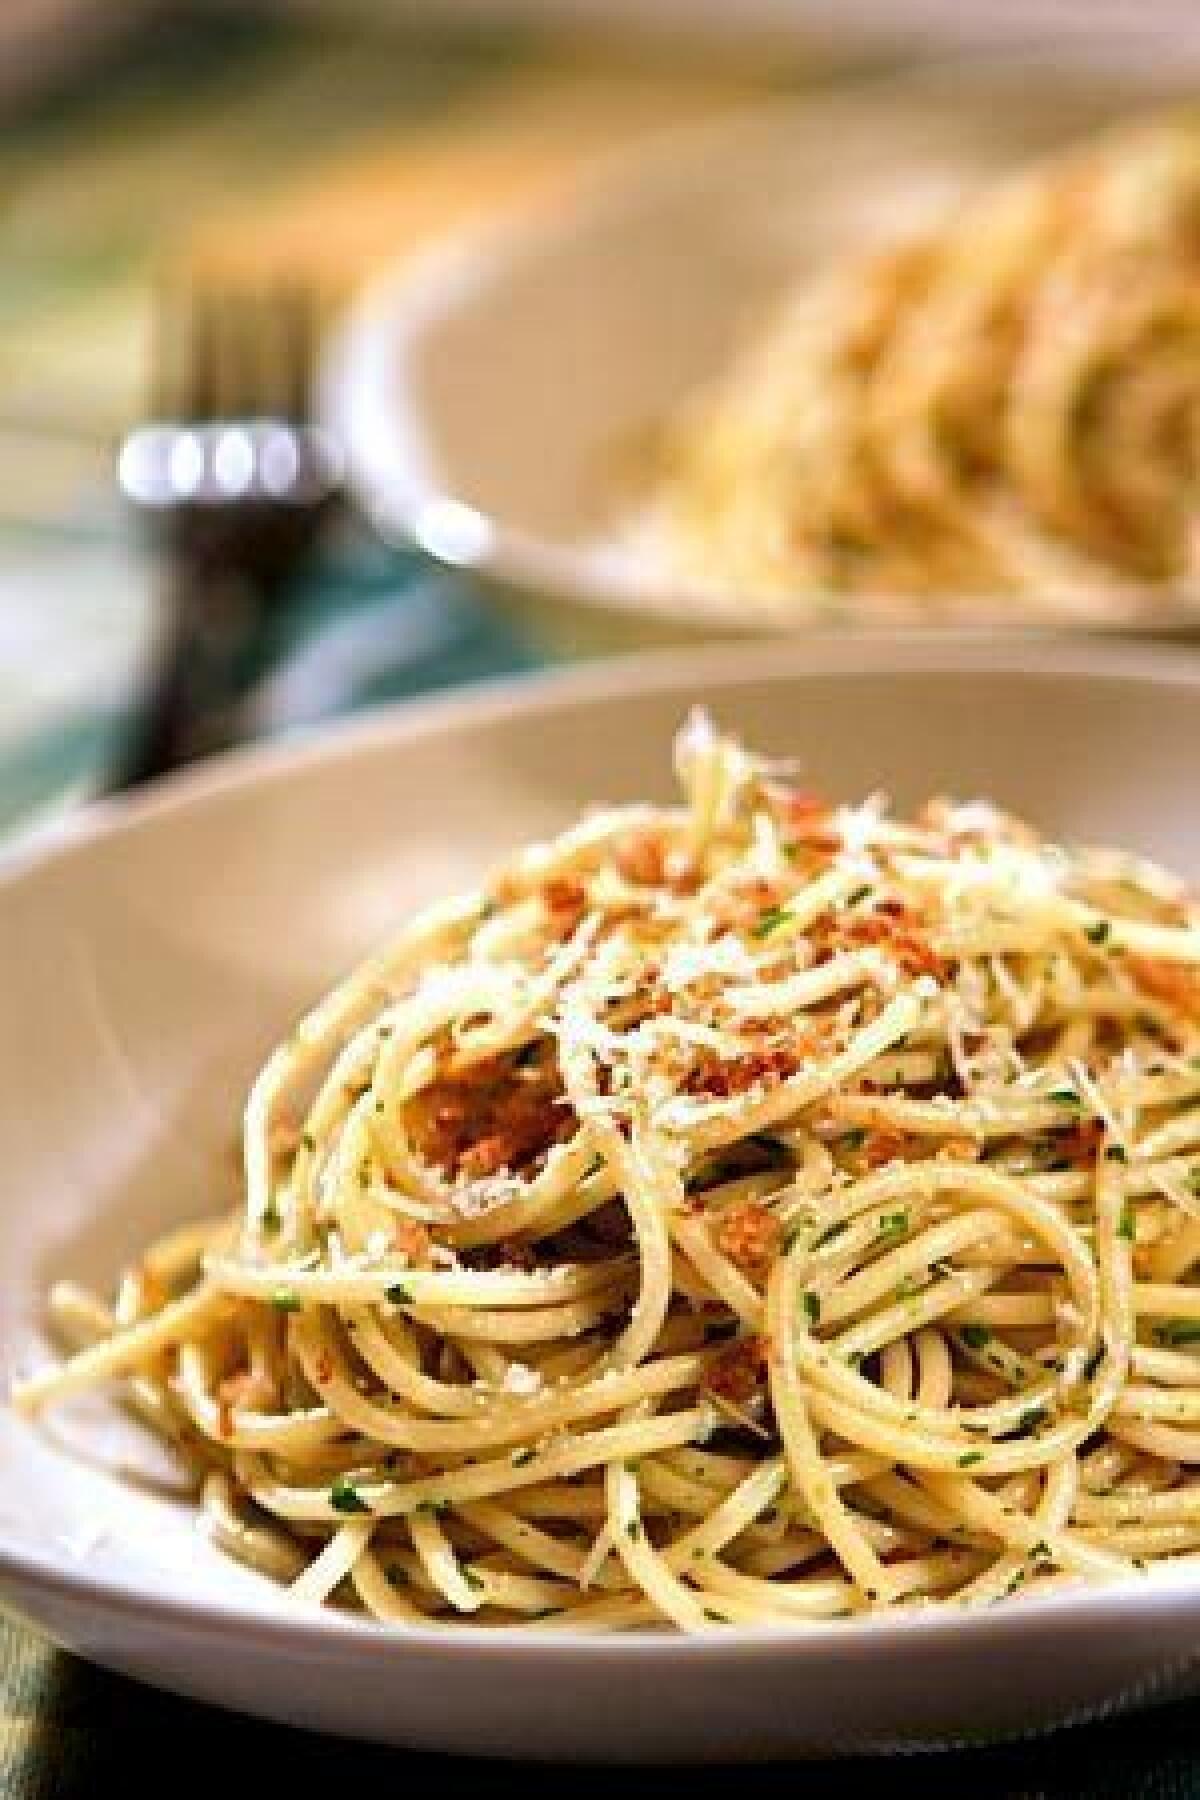 Spaghetti with arugula and bread crumbs.